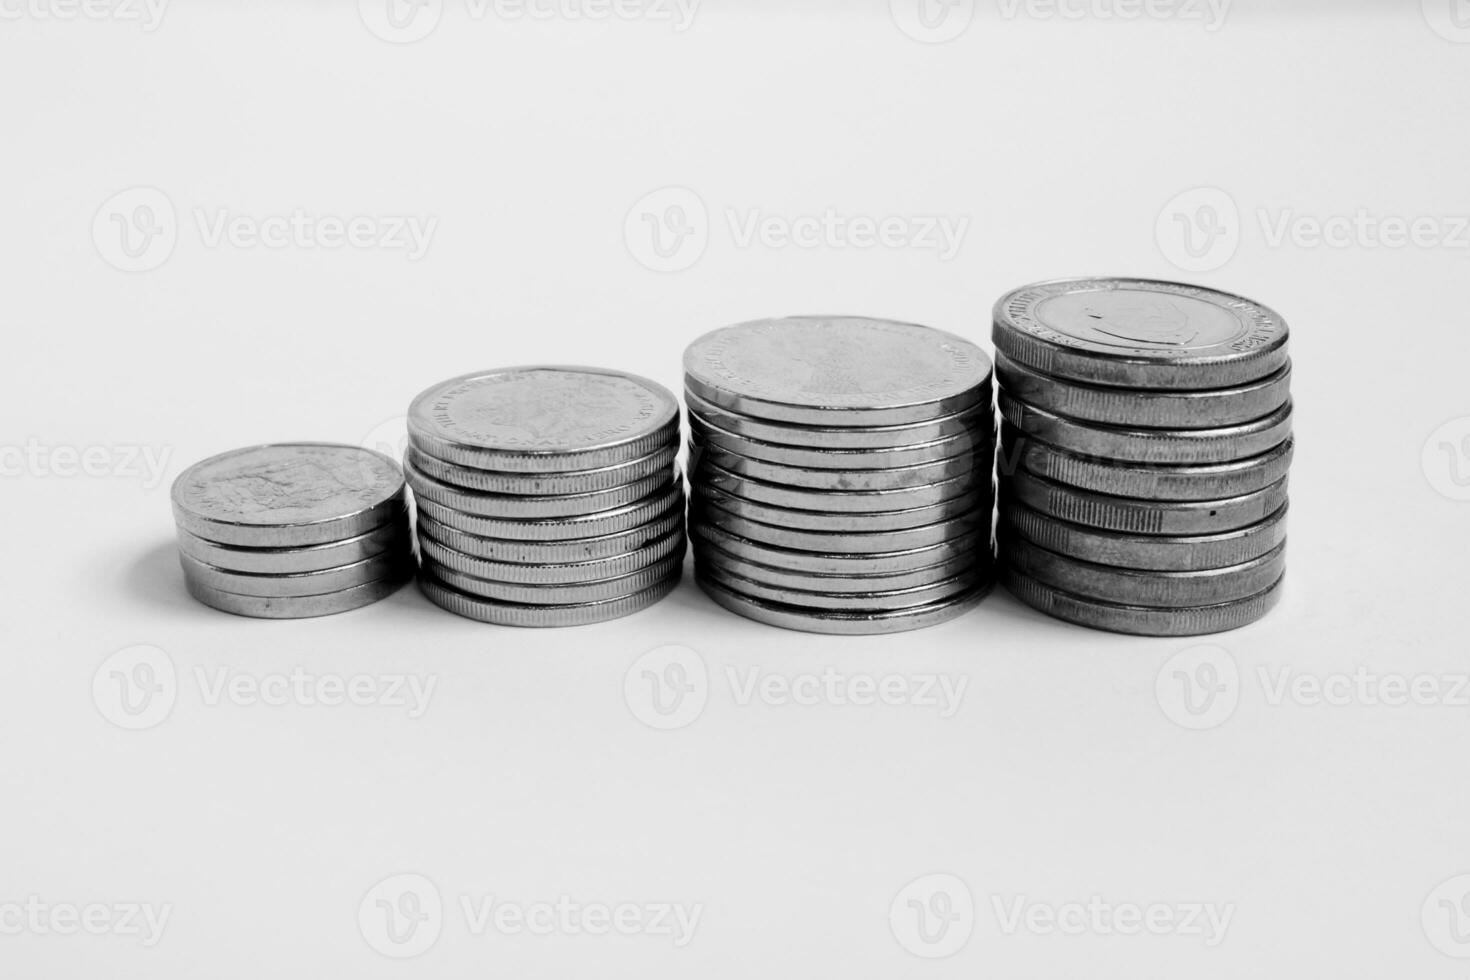 pengar mynt stack på vit bakgrund foto